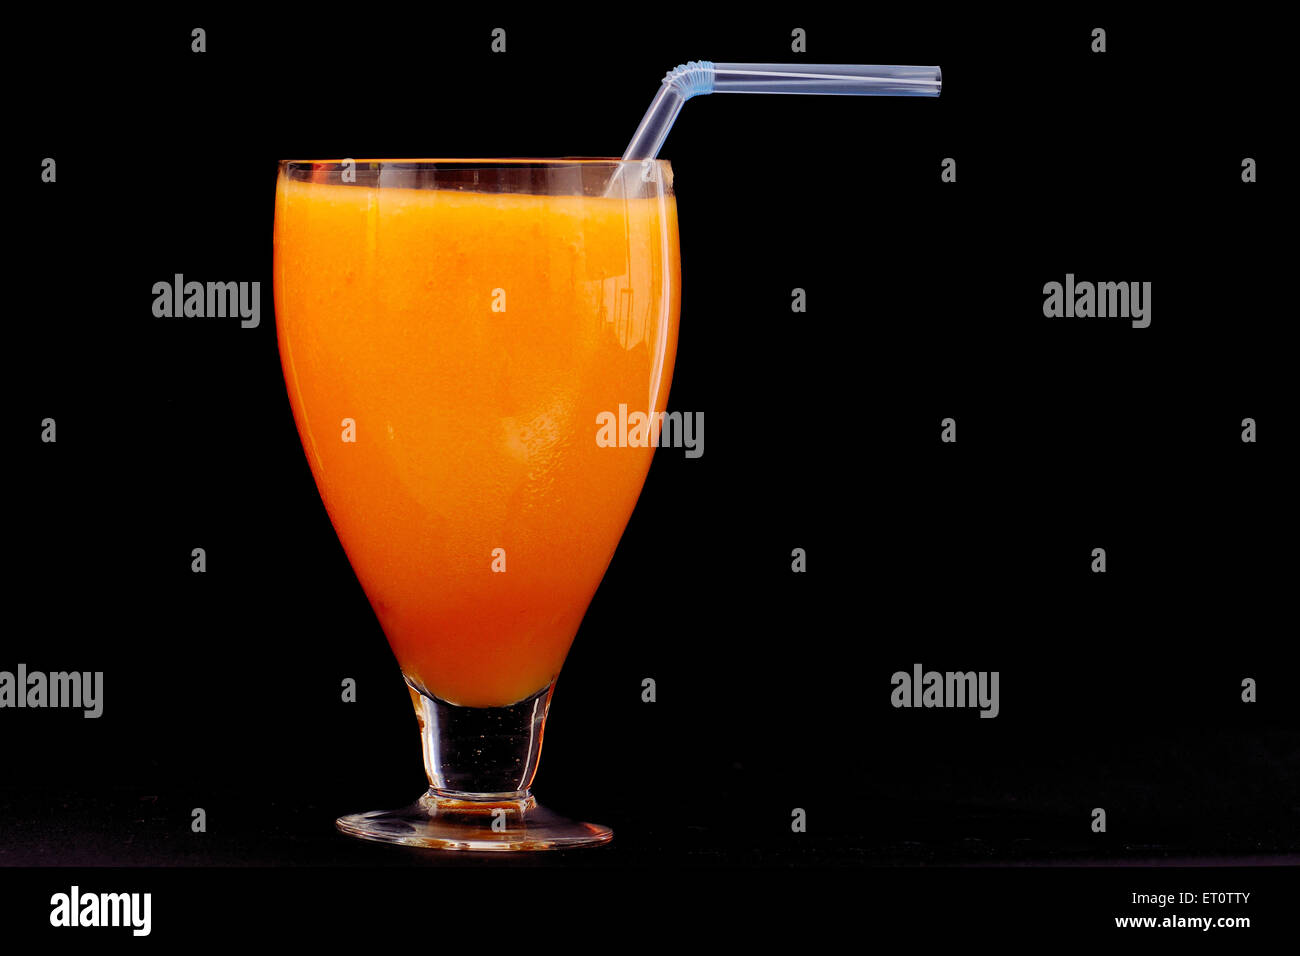 Orange juice in glass with straw on black background Stock Photo